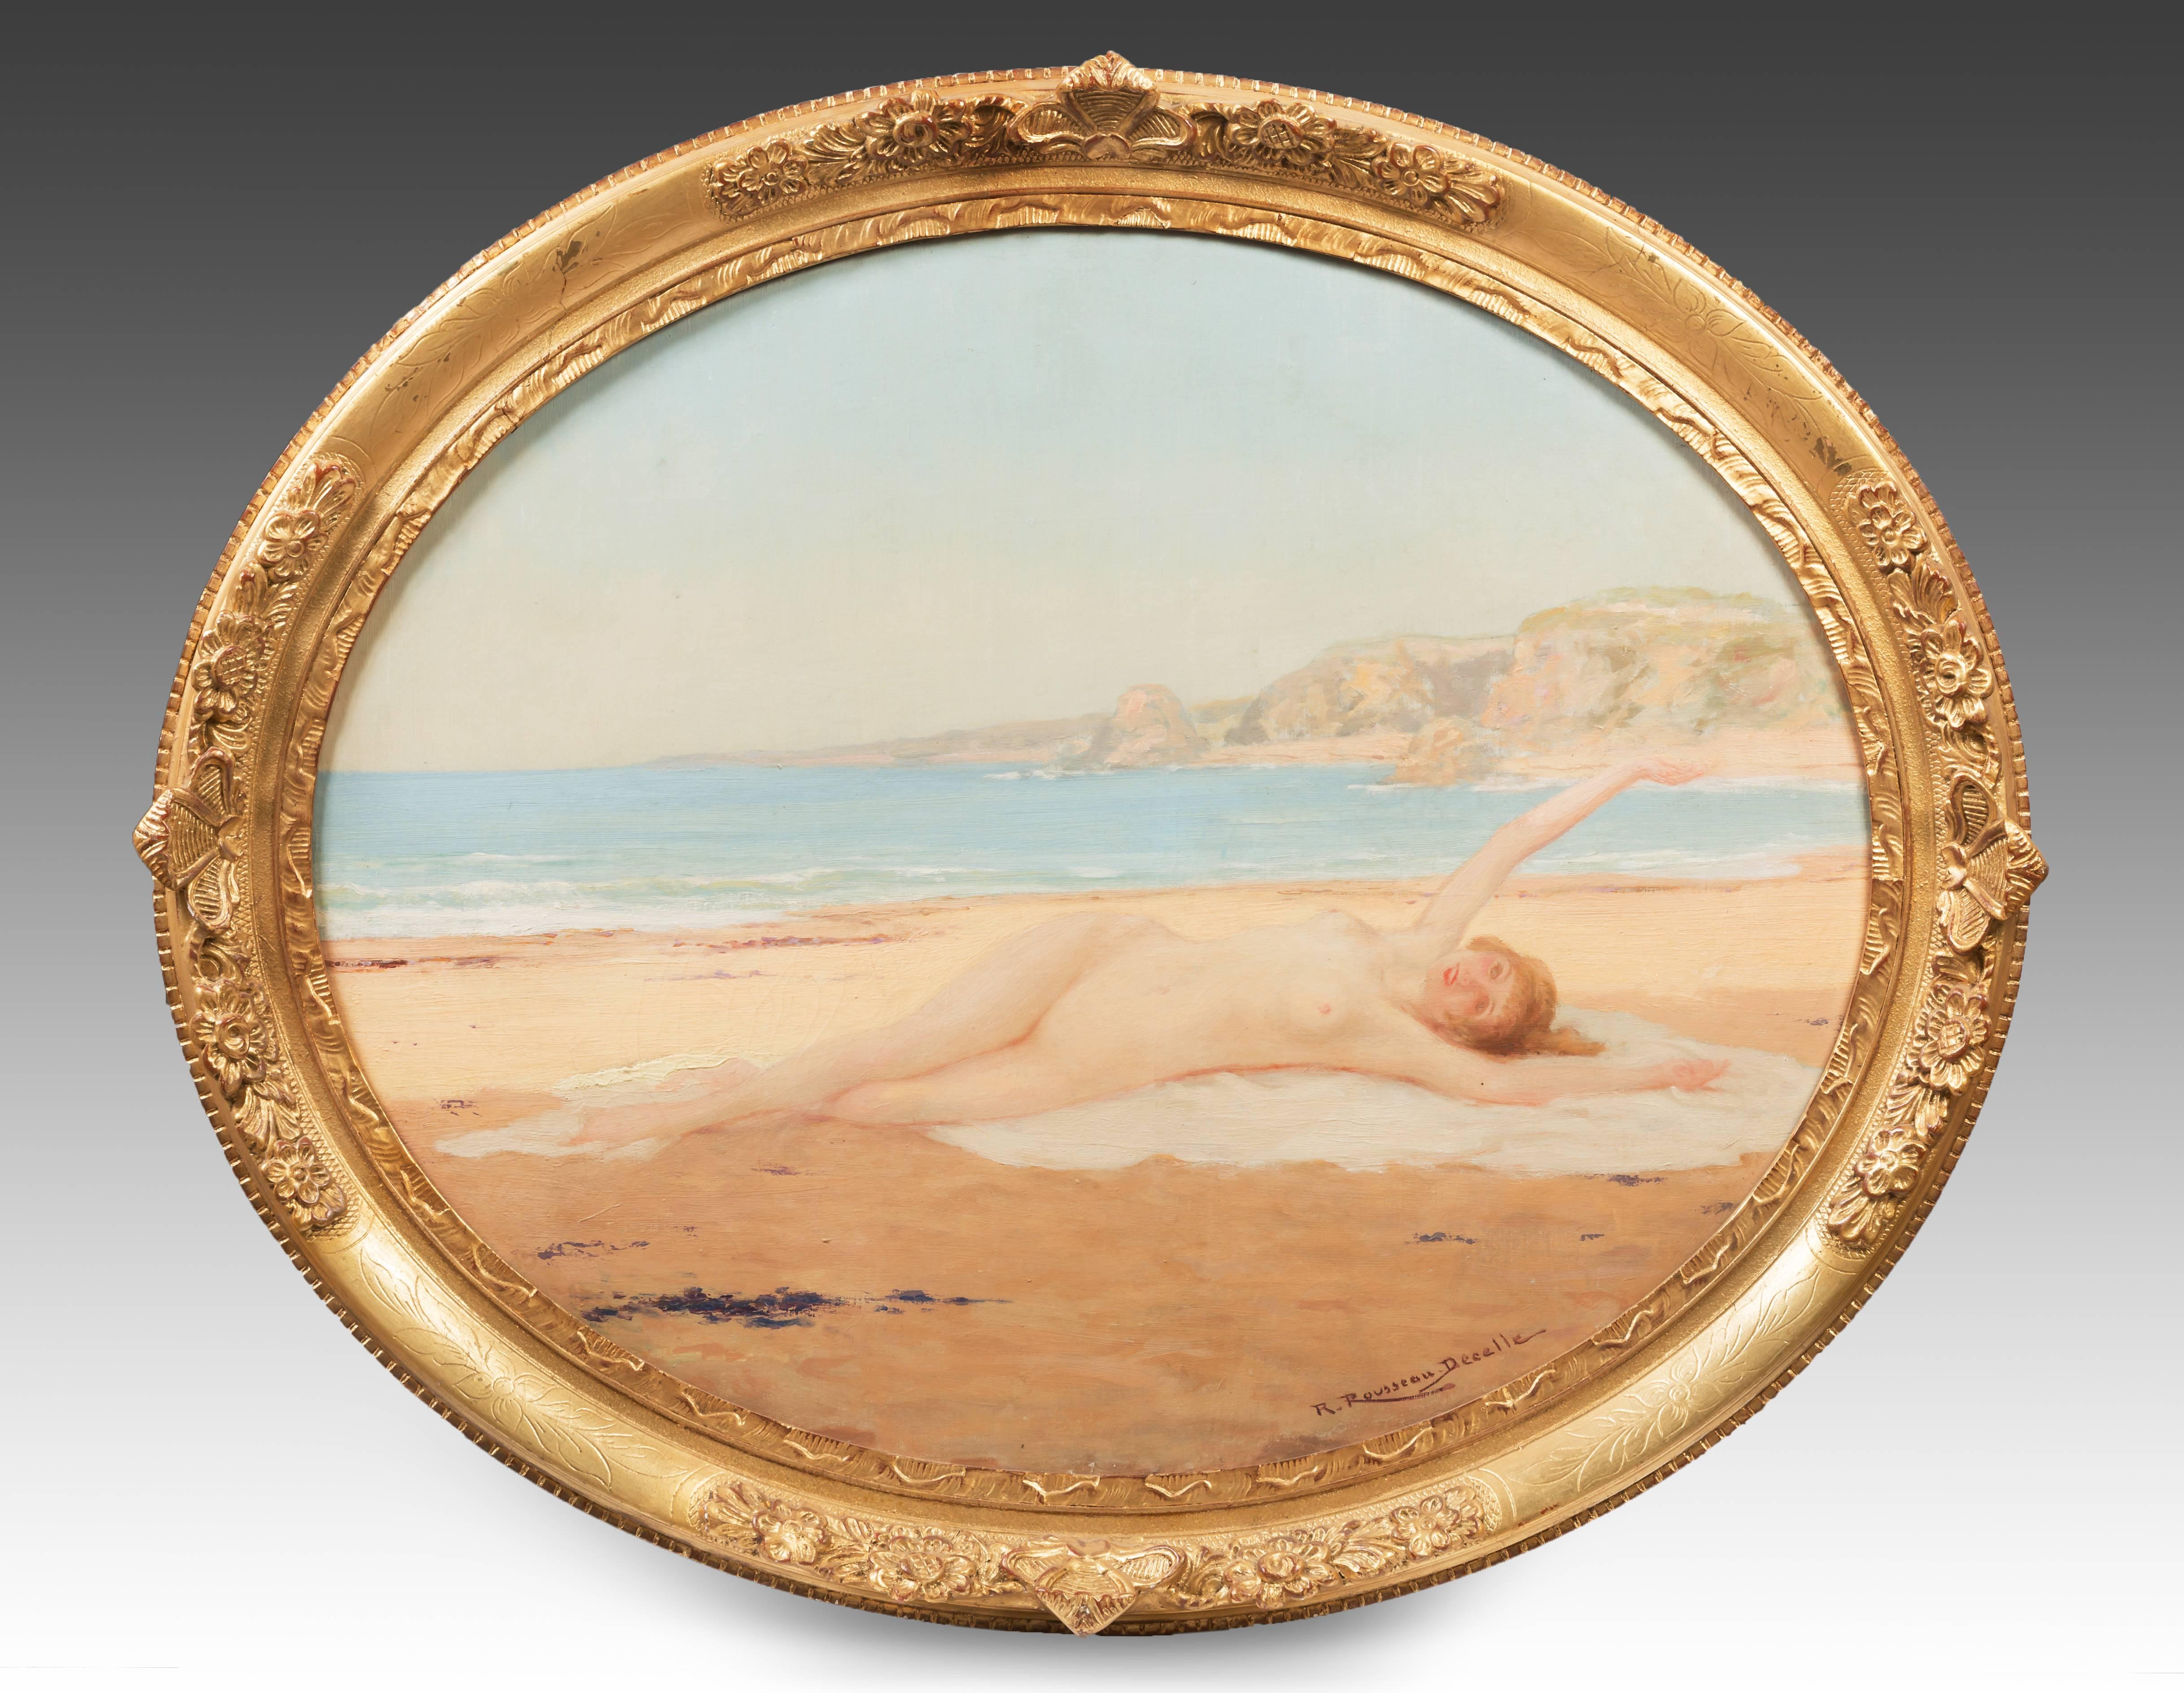 ROUSSEAU DECELLE René Figurative Painting - Nude on the beach by René ROUSSEAU DECELLE